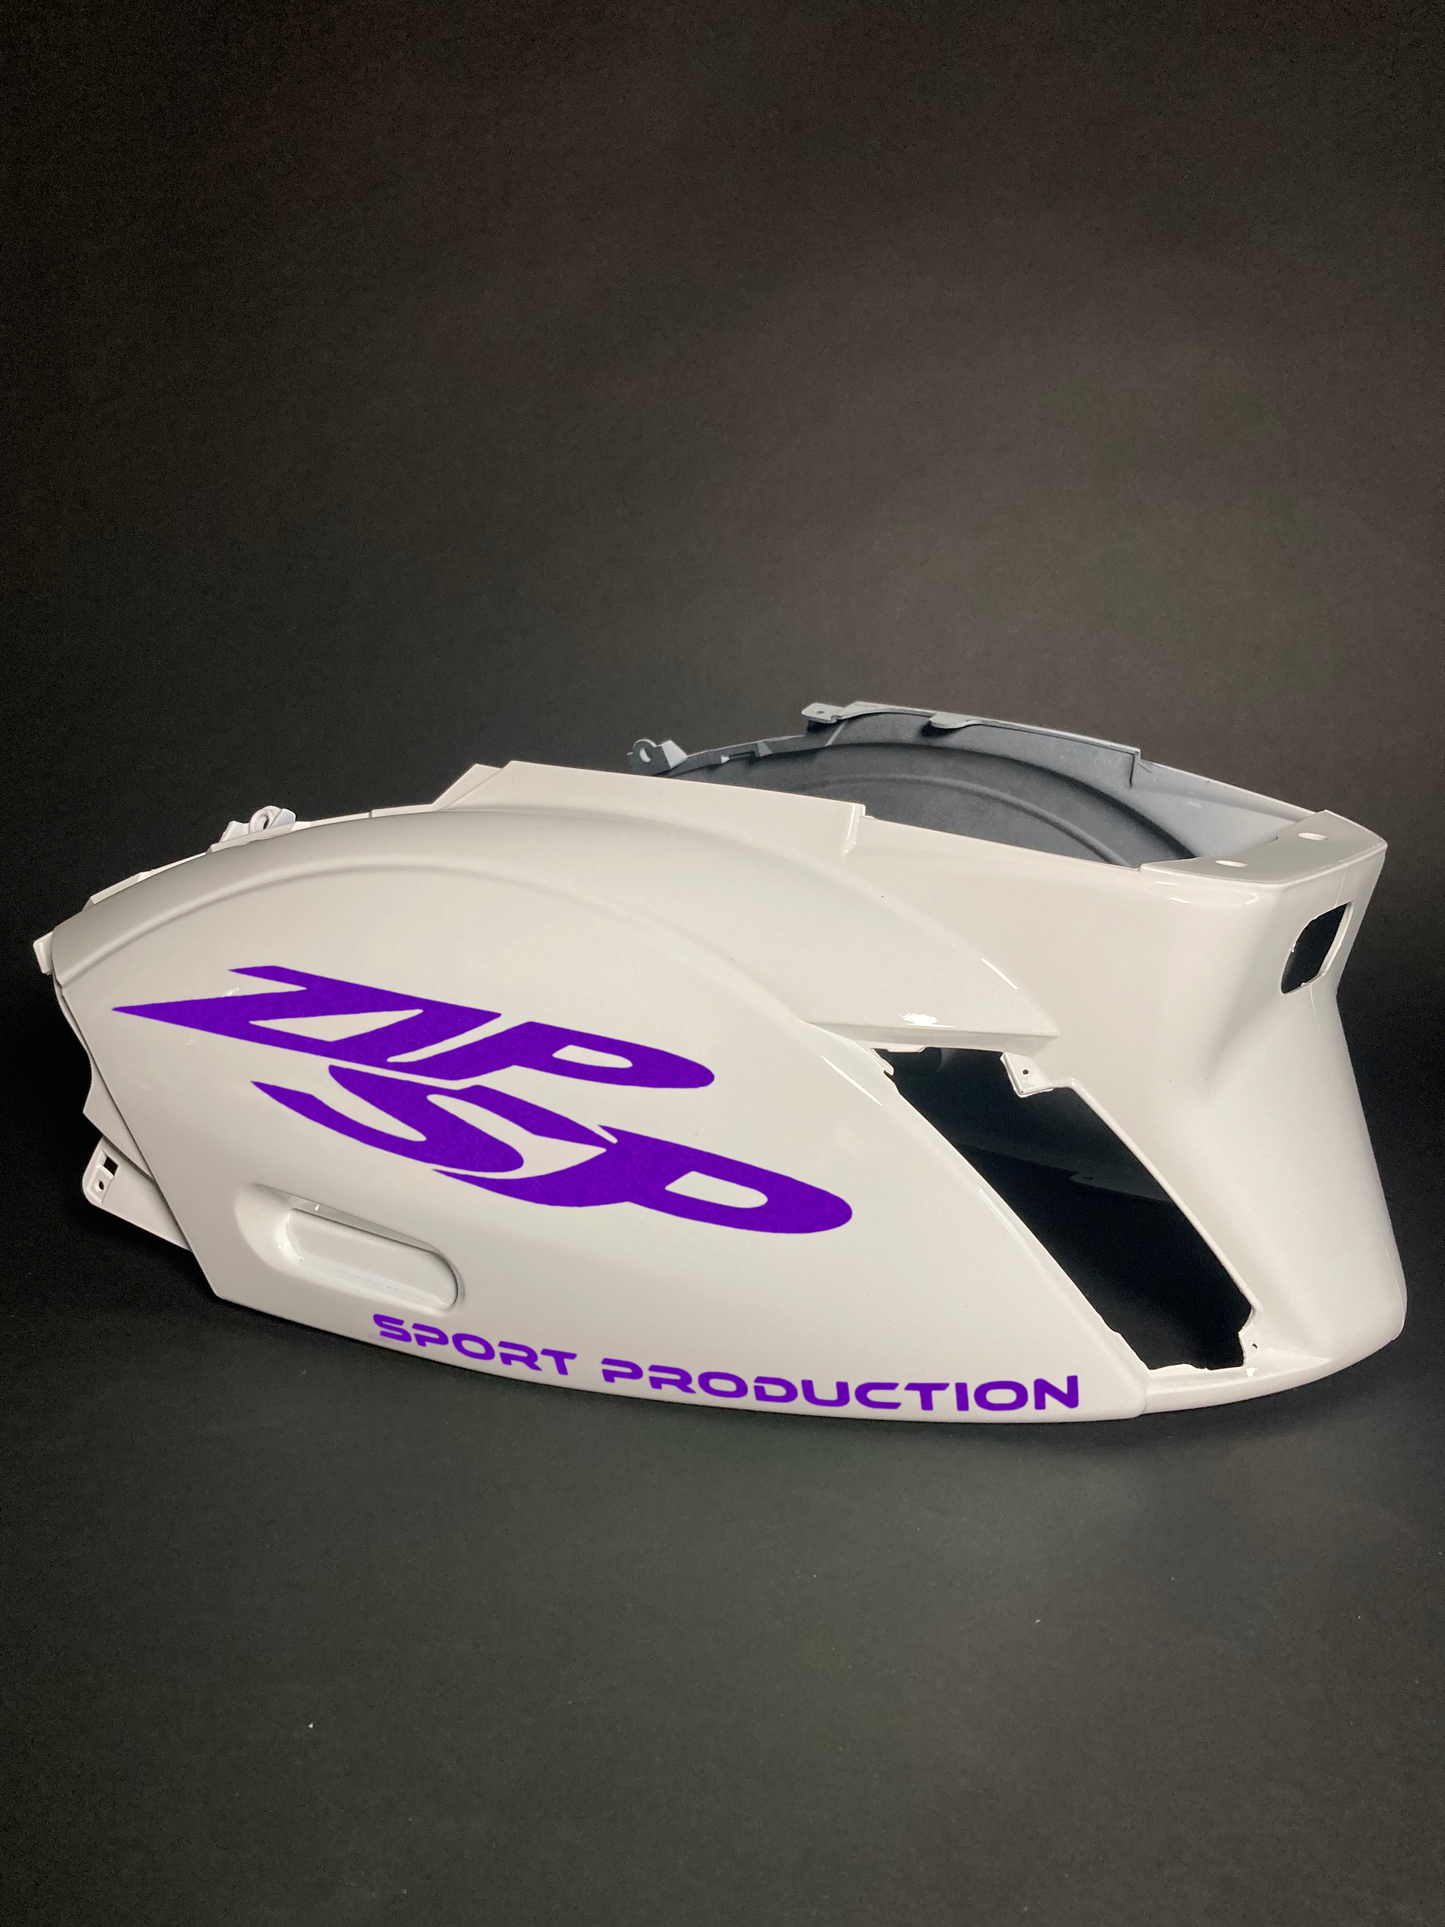 Zip Sports Production | Purple